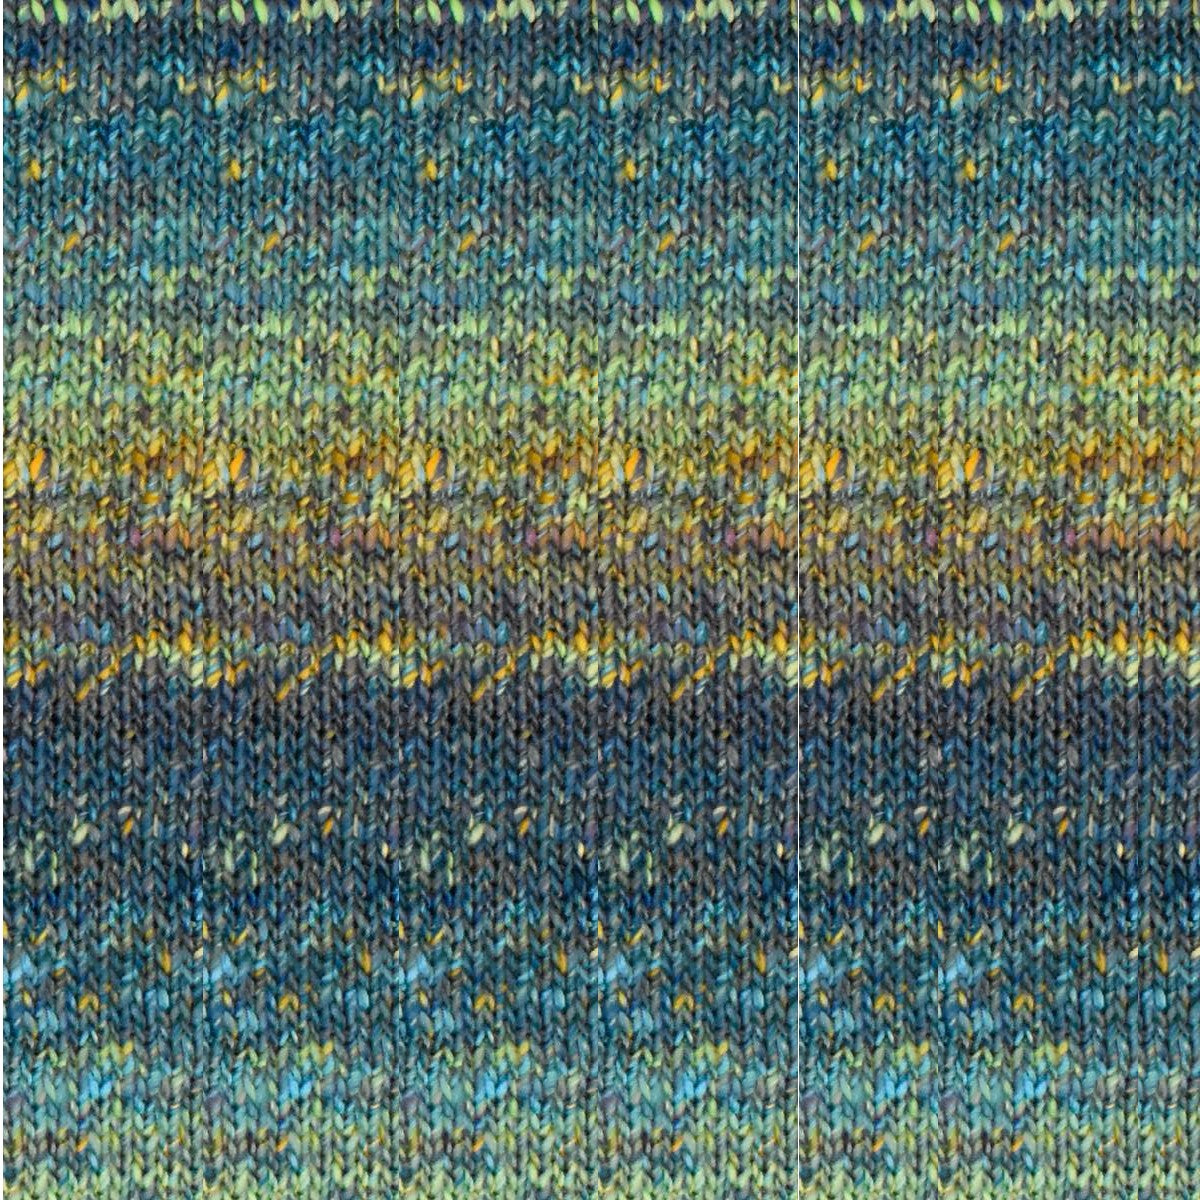 Harpeth Crochet Tunic